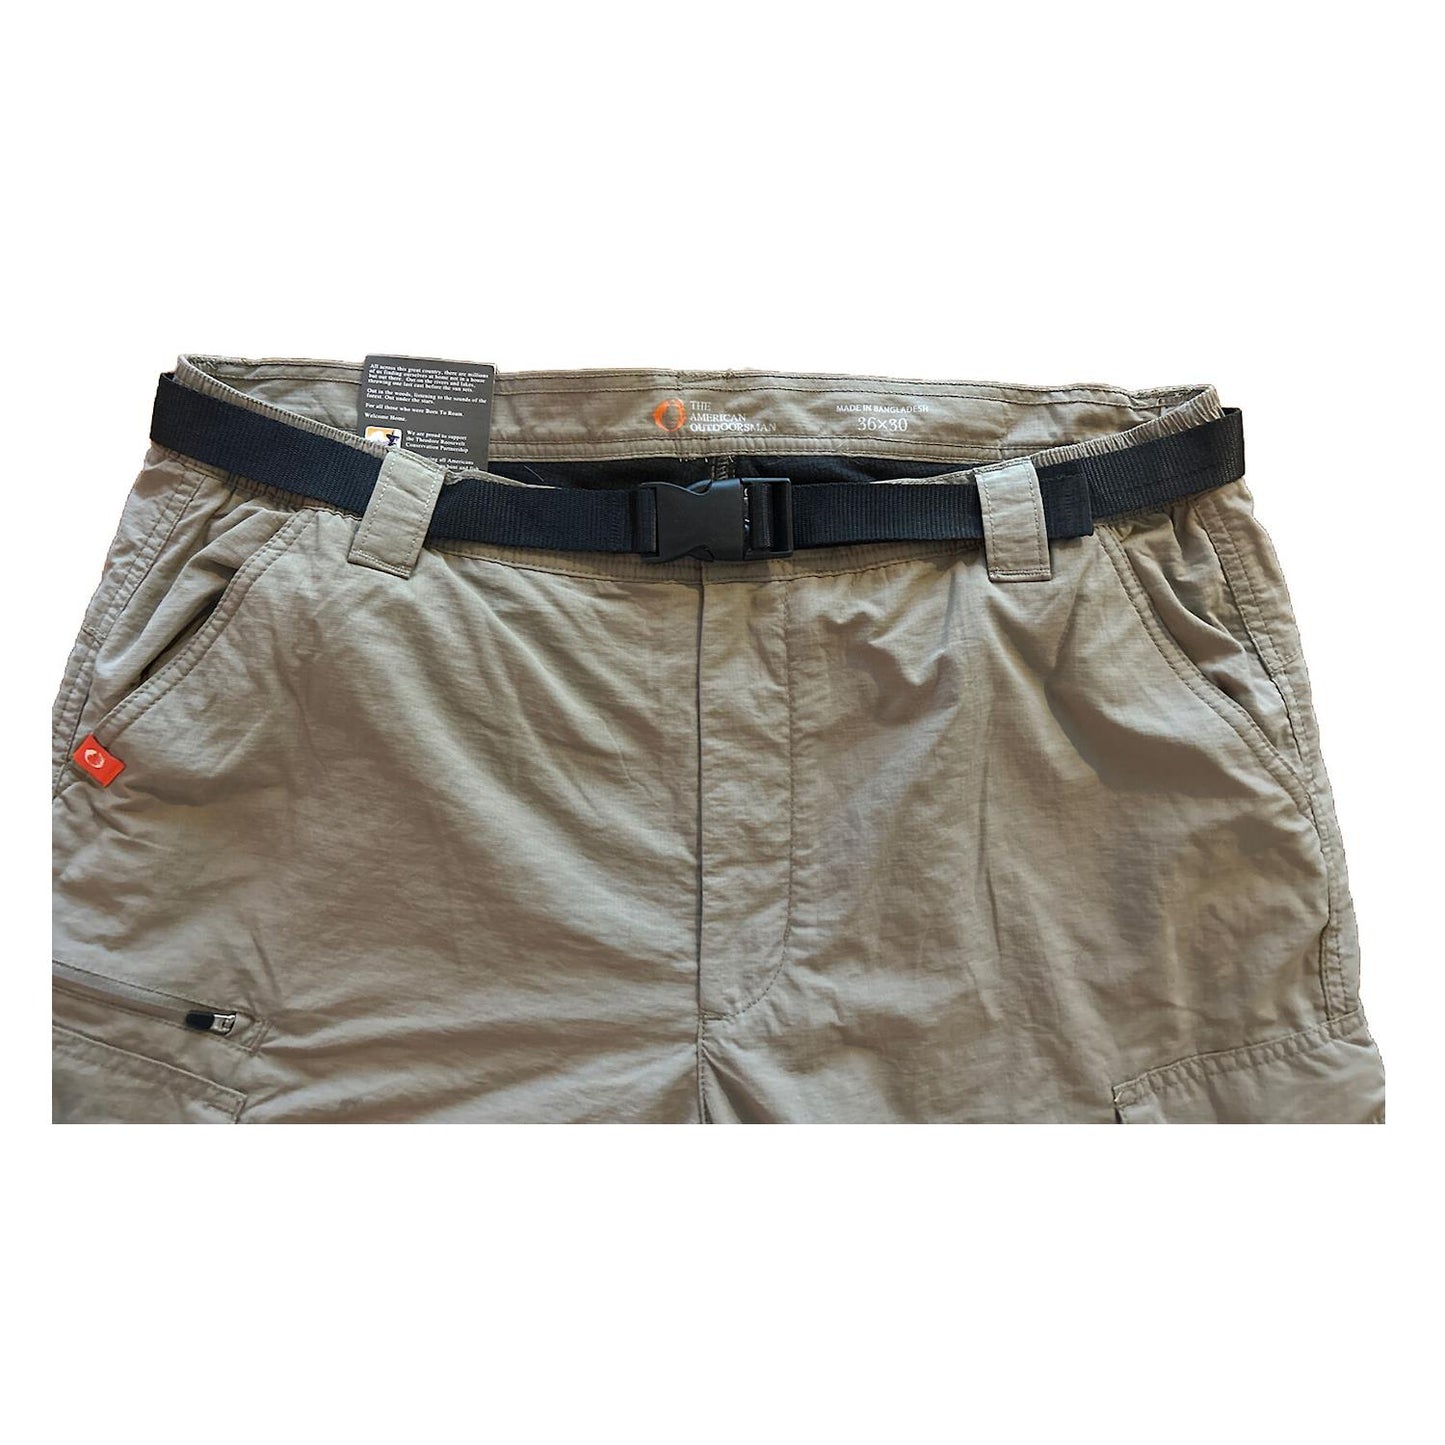 The American Outdoorsman Pants Men's Fleece Lined Cargo Hiking Pants 36x30 Khaki